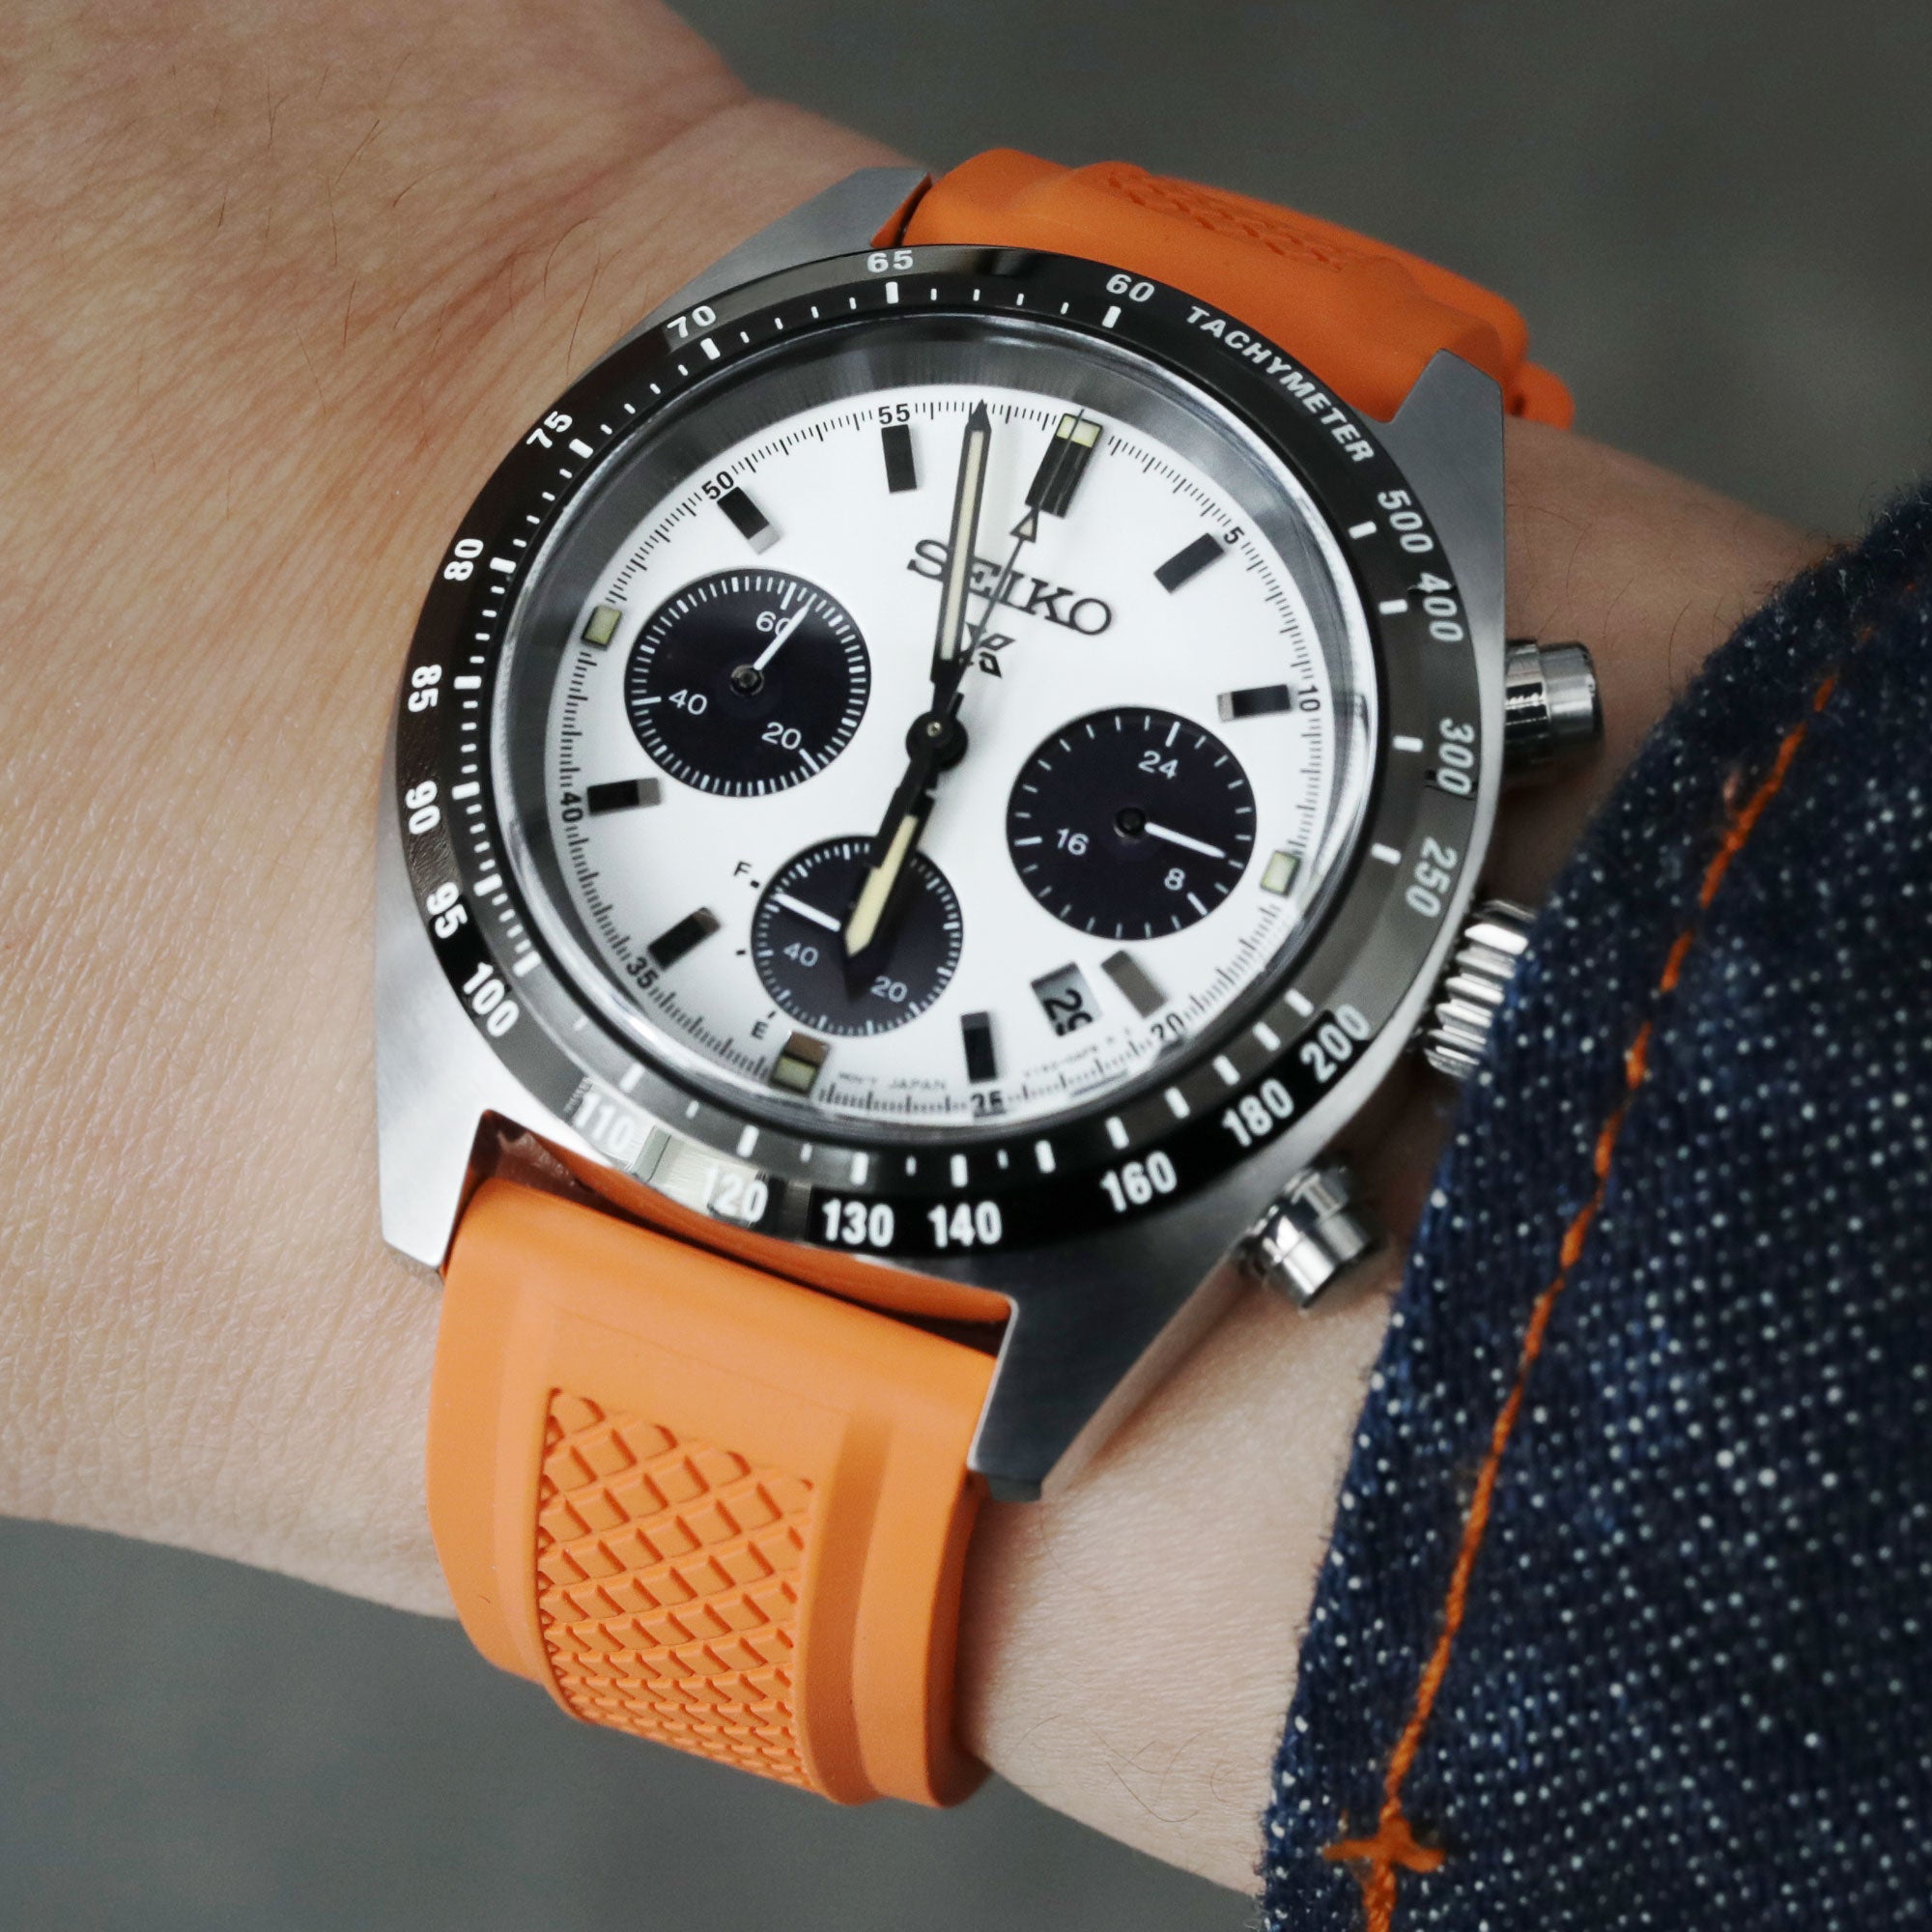 Seiko Speedtimer Panda chronograph SSC813 White Seitona rubber watch band by Strapcode